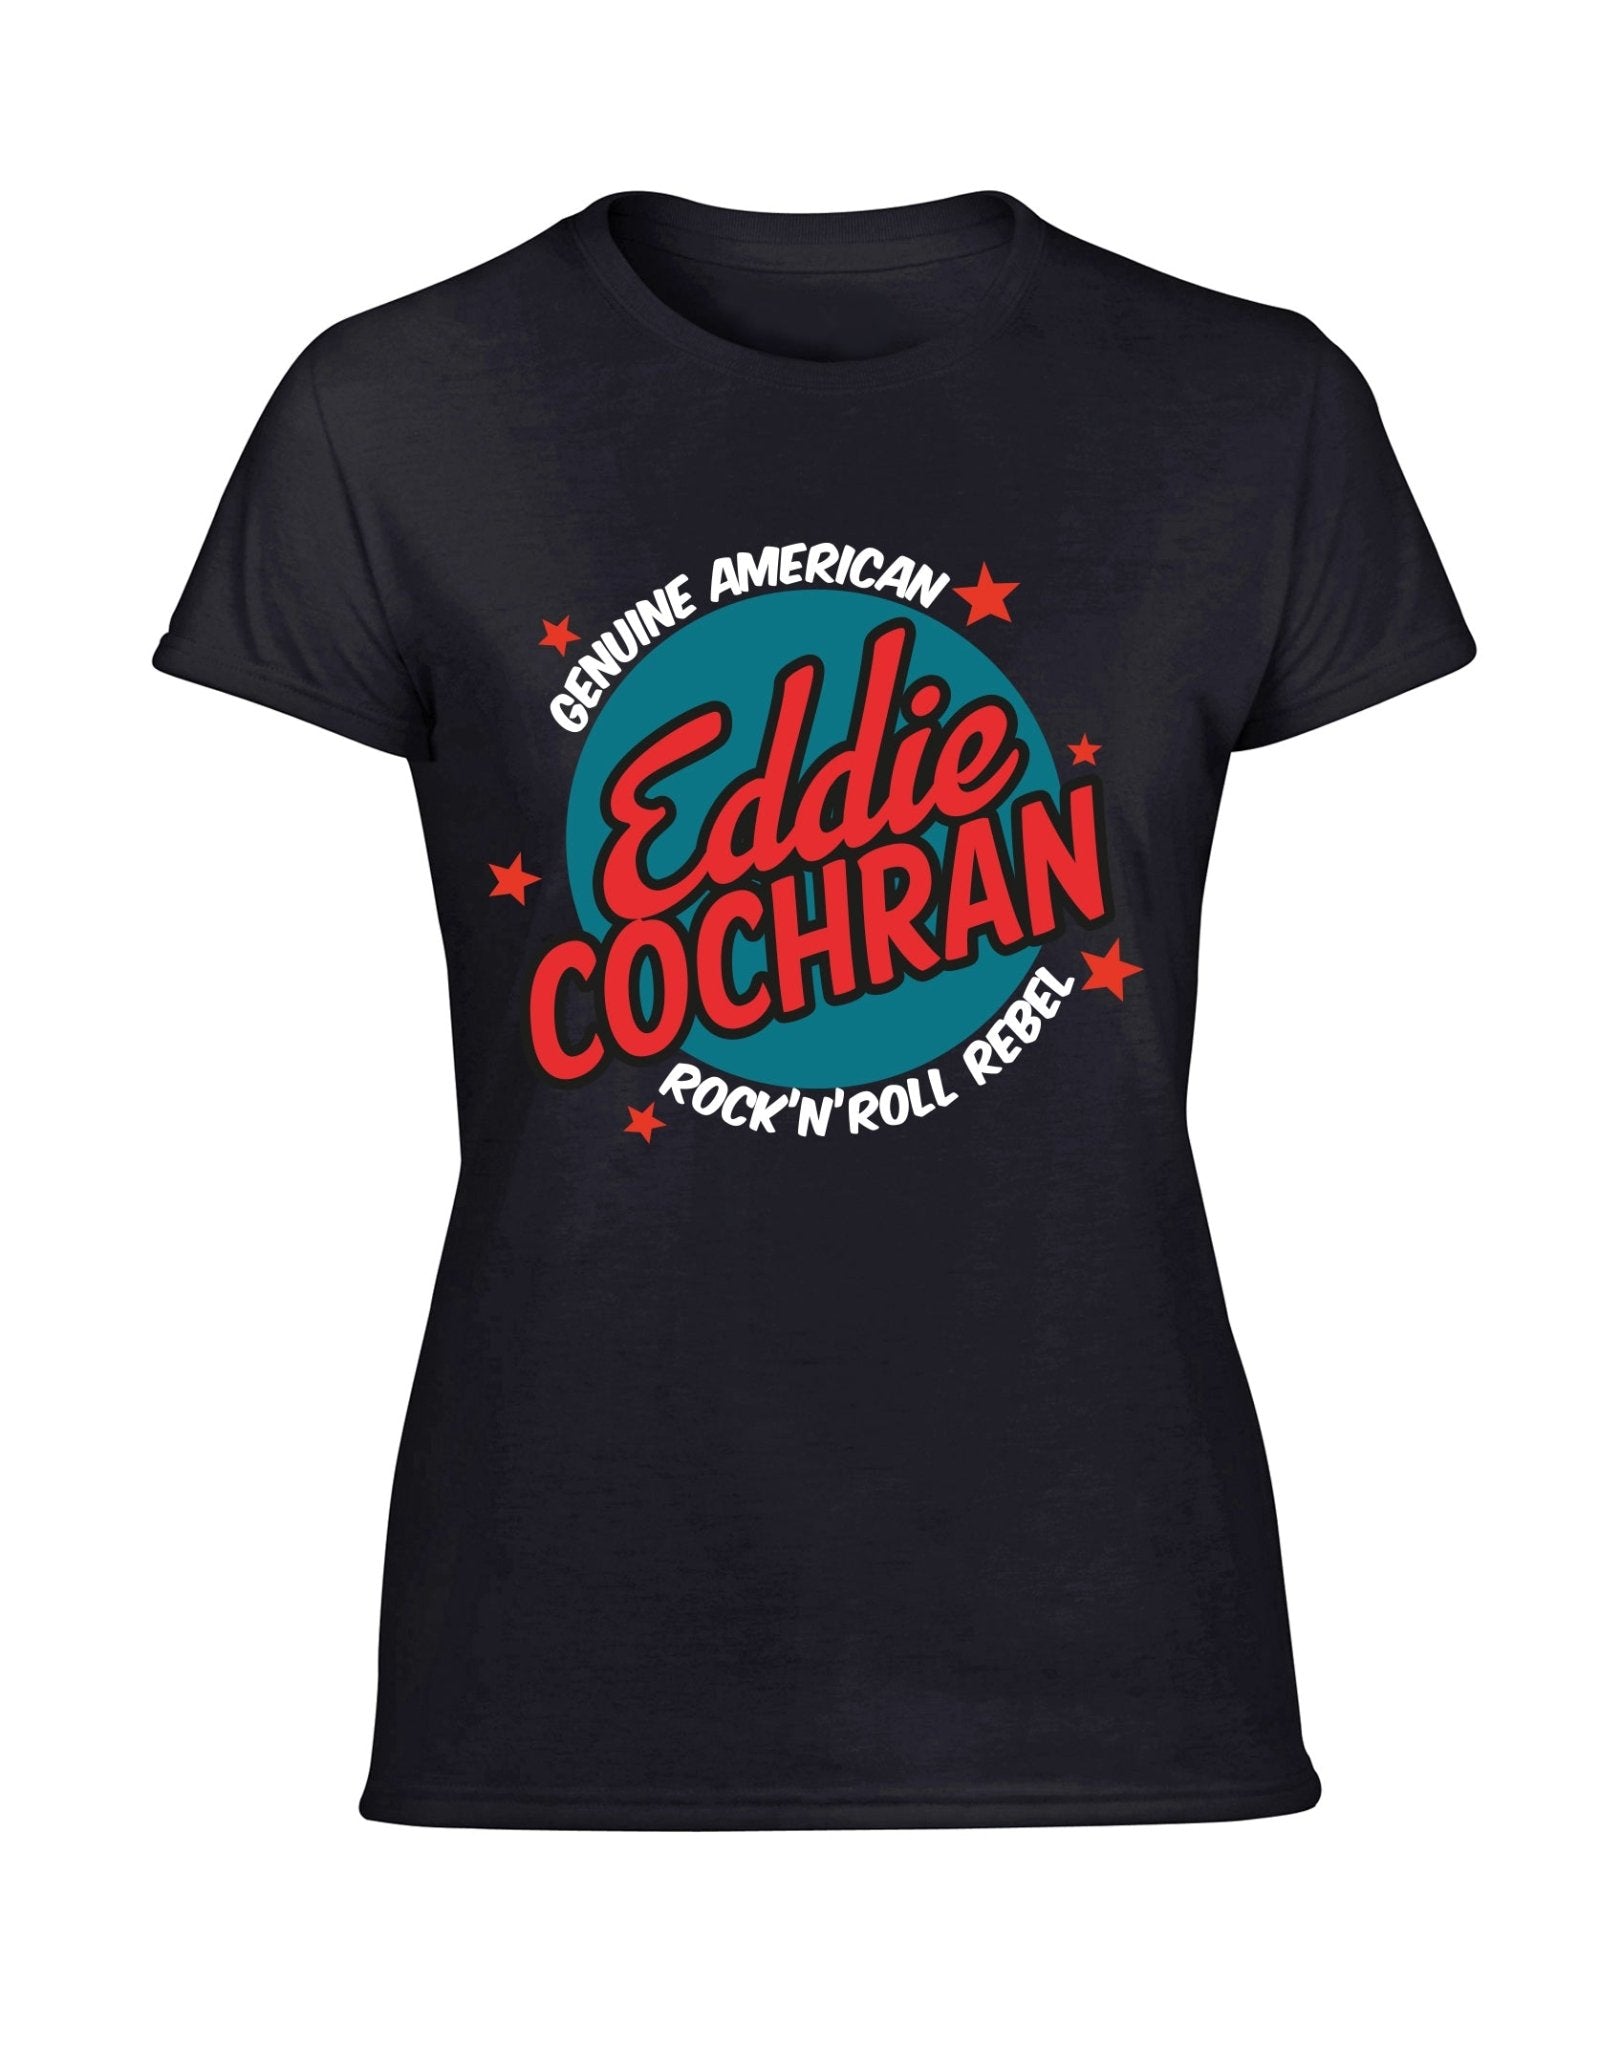 Eddie Cochran - rock'n'roll rebel - ladies fit t-shirt- various colours - Dirty Stop Outs